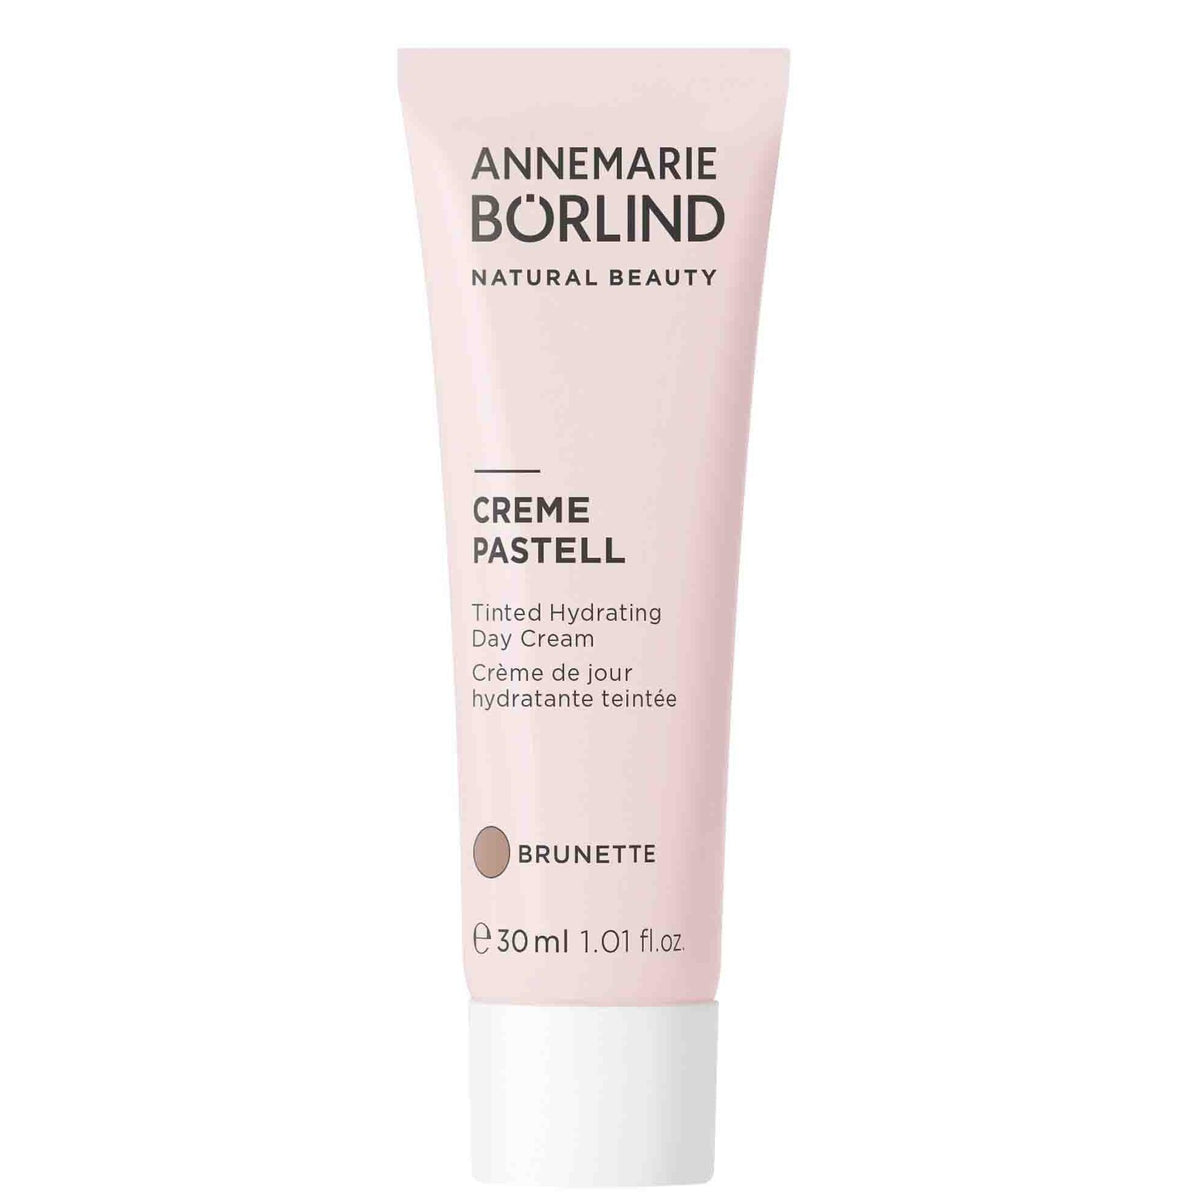 Annemarie Borling Creme Pastell Brunette Tinted Day cream Cosmetics - Makeup at Village Vitamin Store